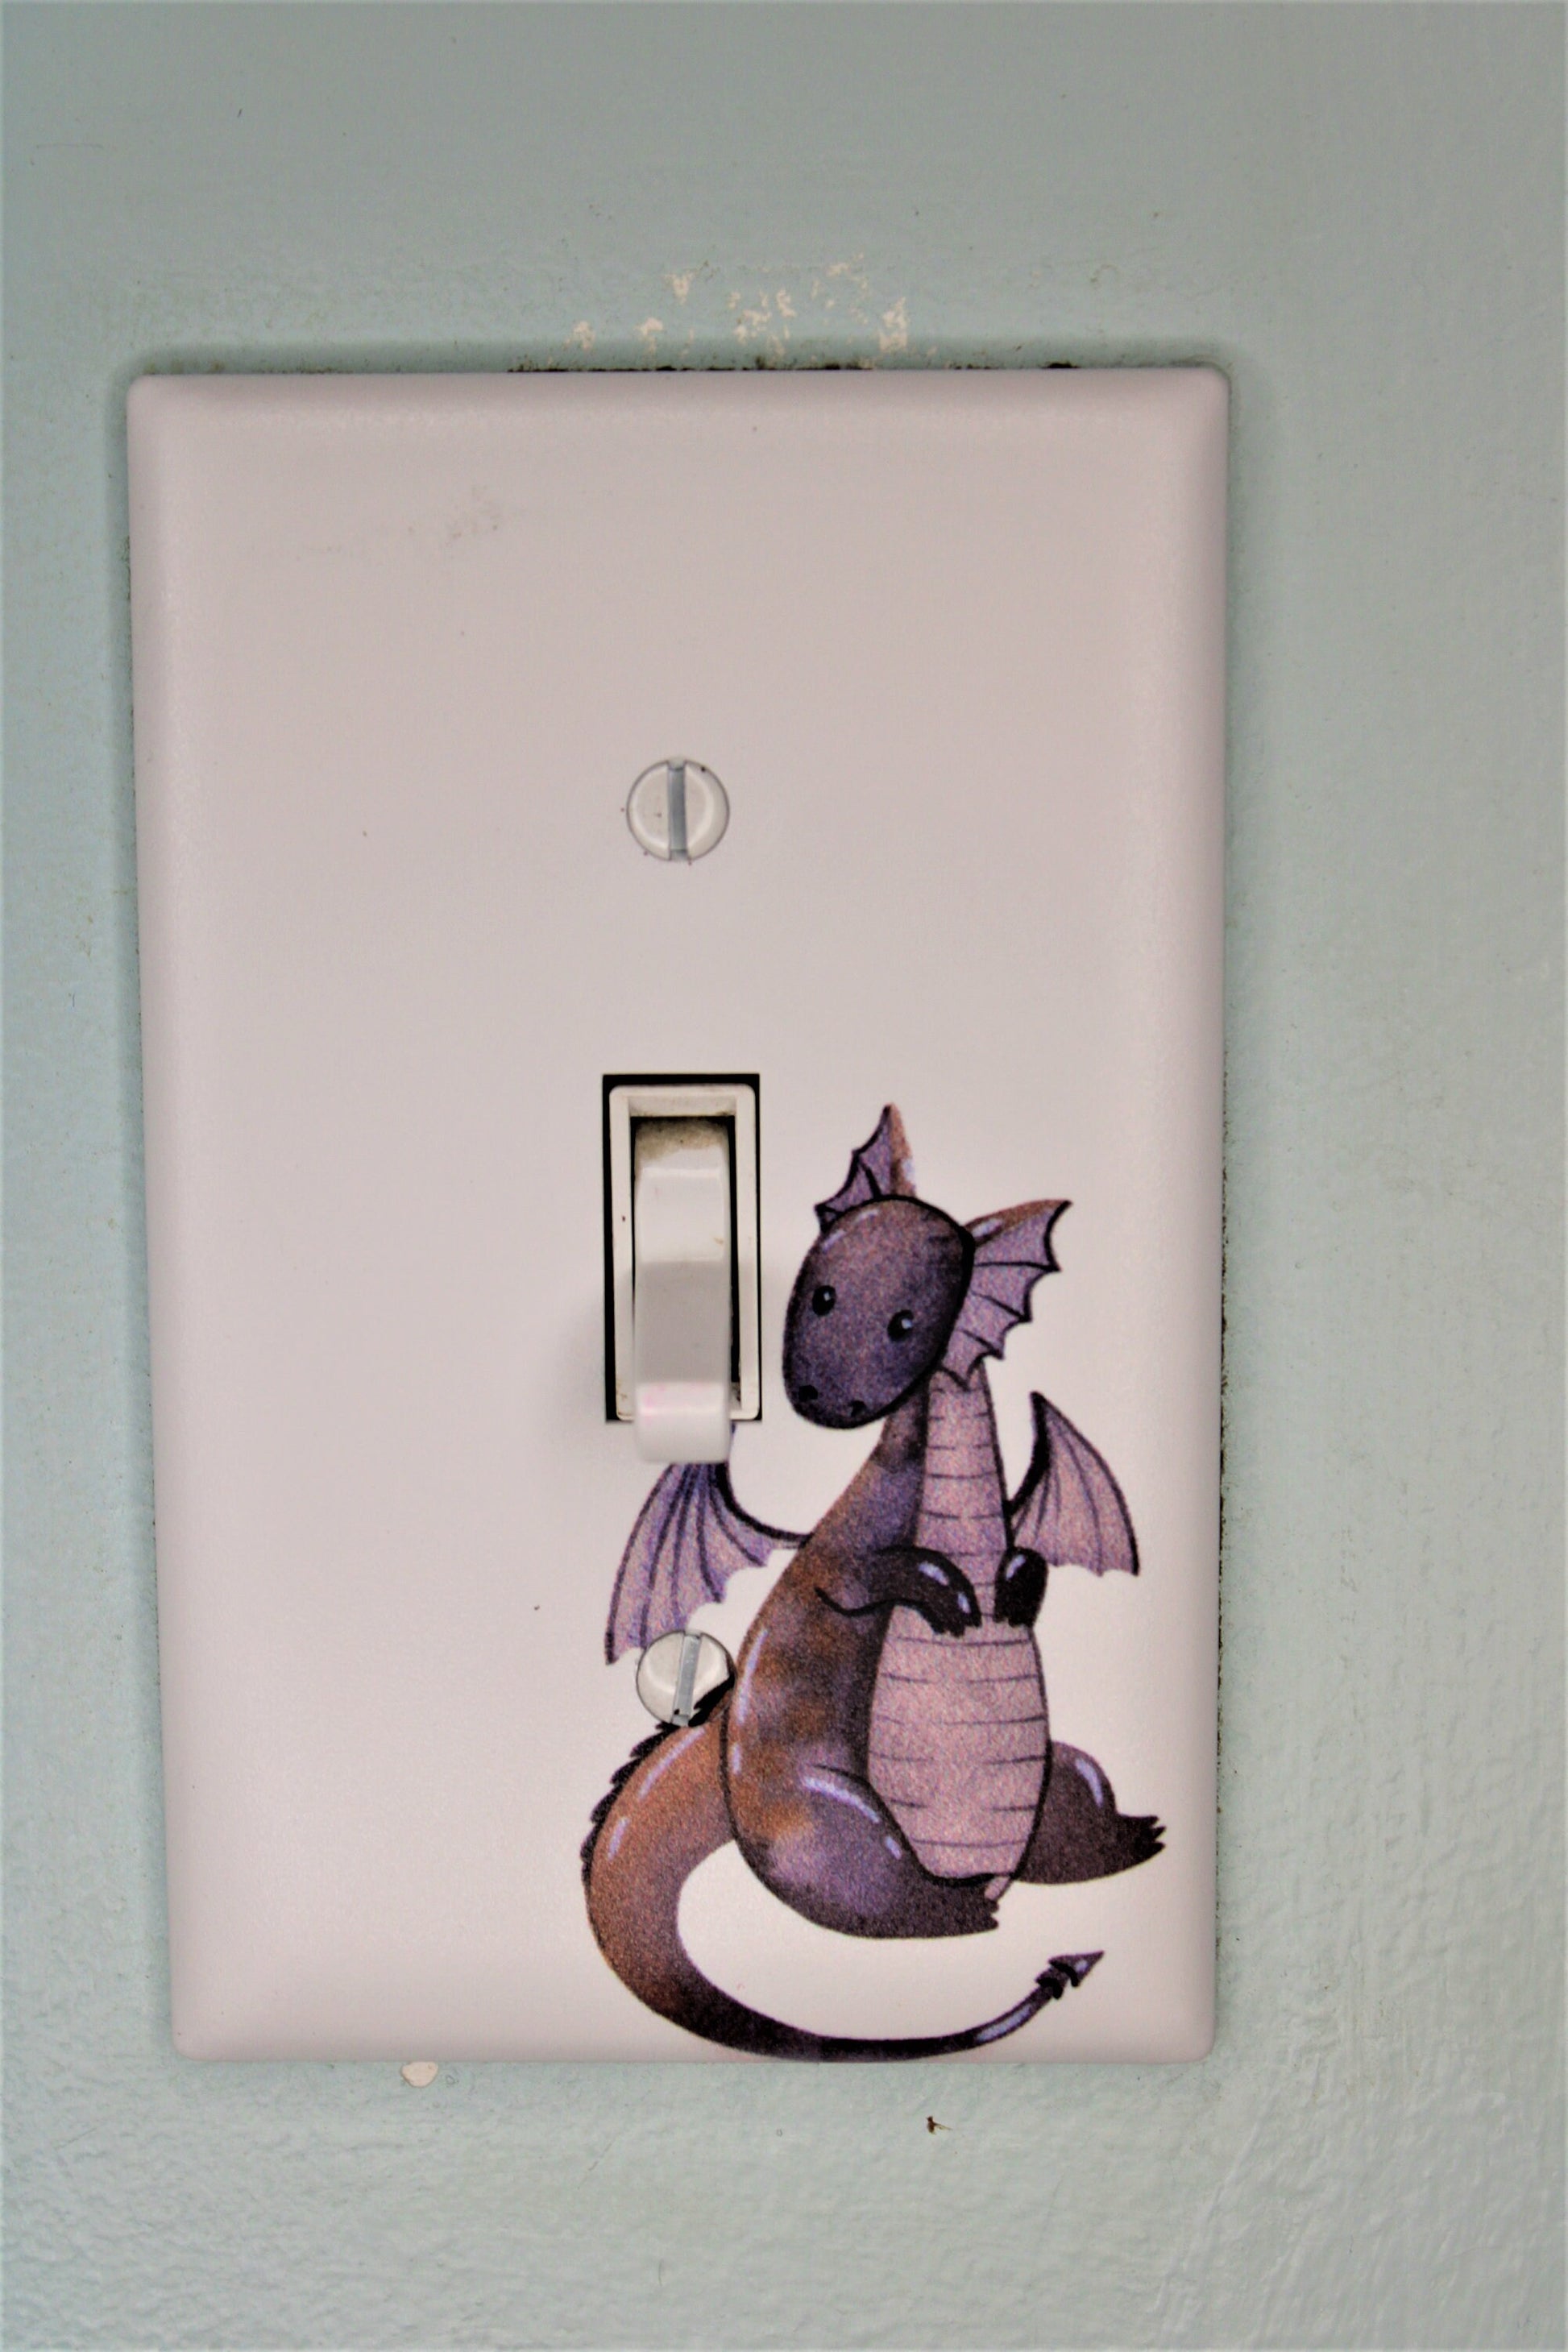 purple dragon cartoon prince princess room decor unique custom printed in color light switch plate cover durable fairy tale theme